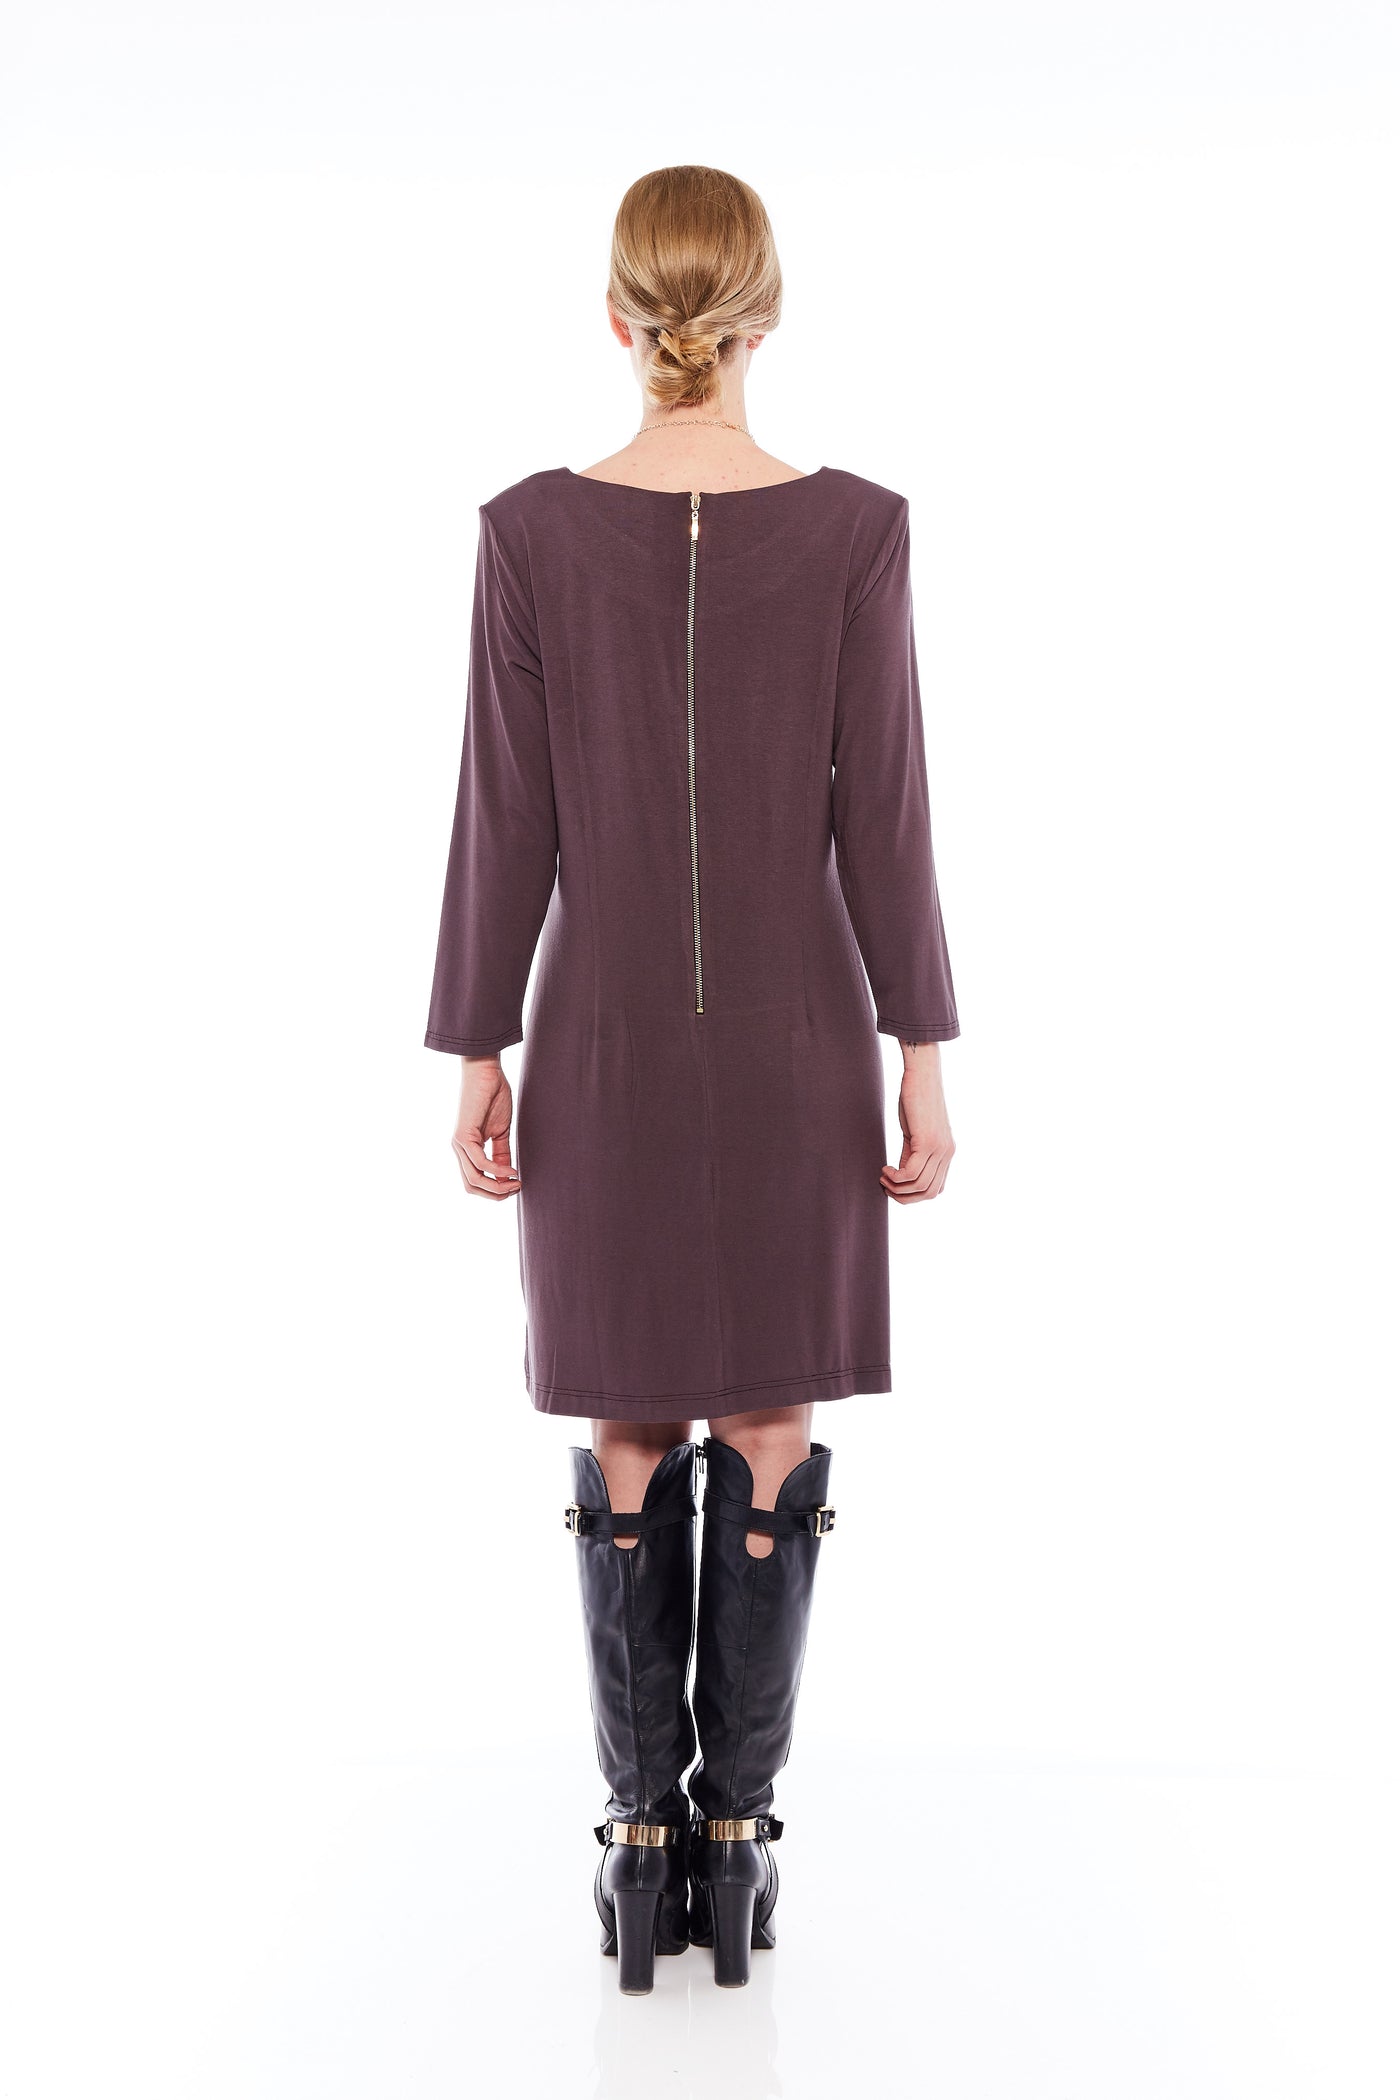 Buy Women's Long Sleeve Brown Midi Dresses Online